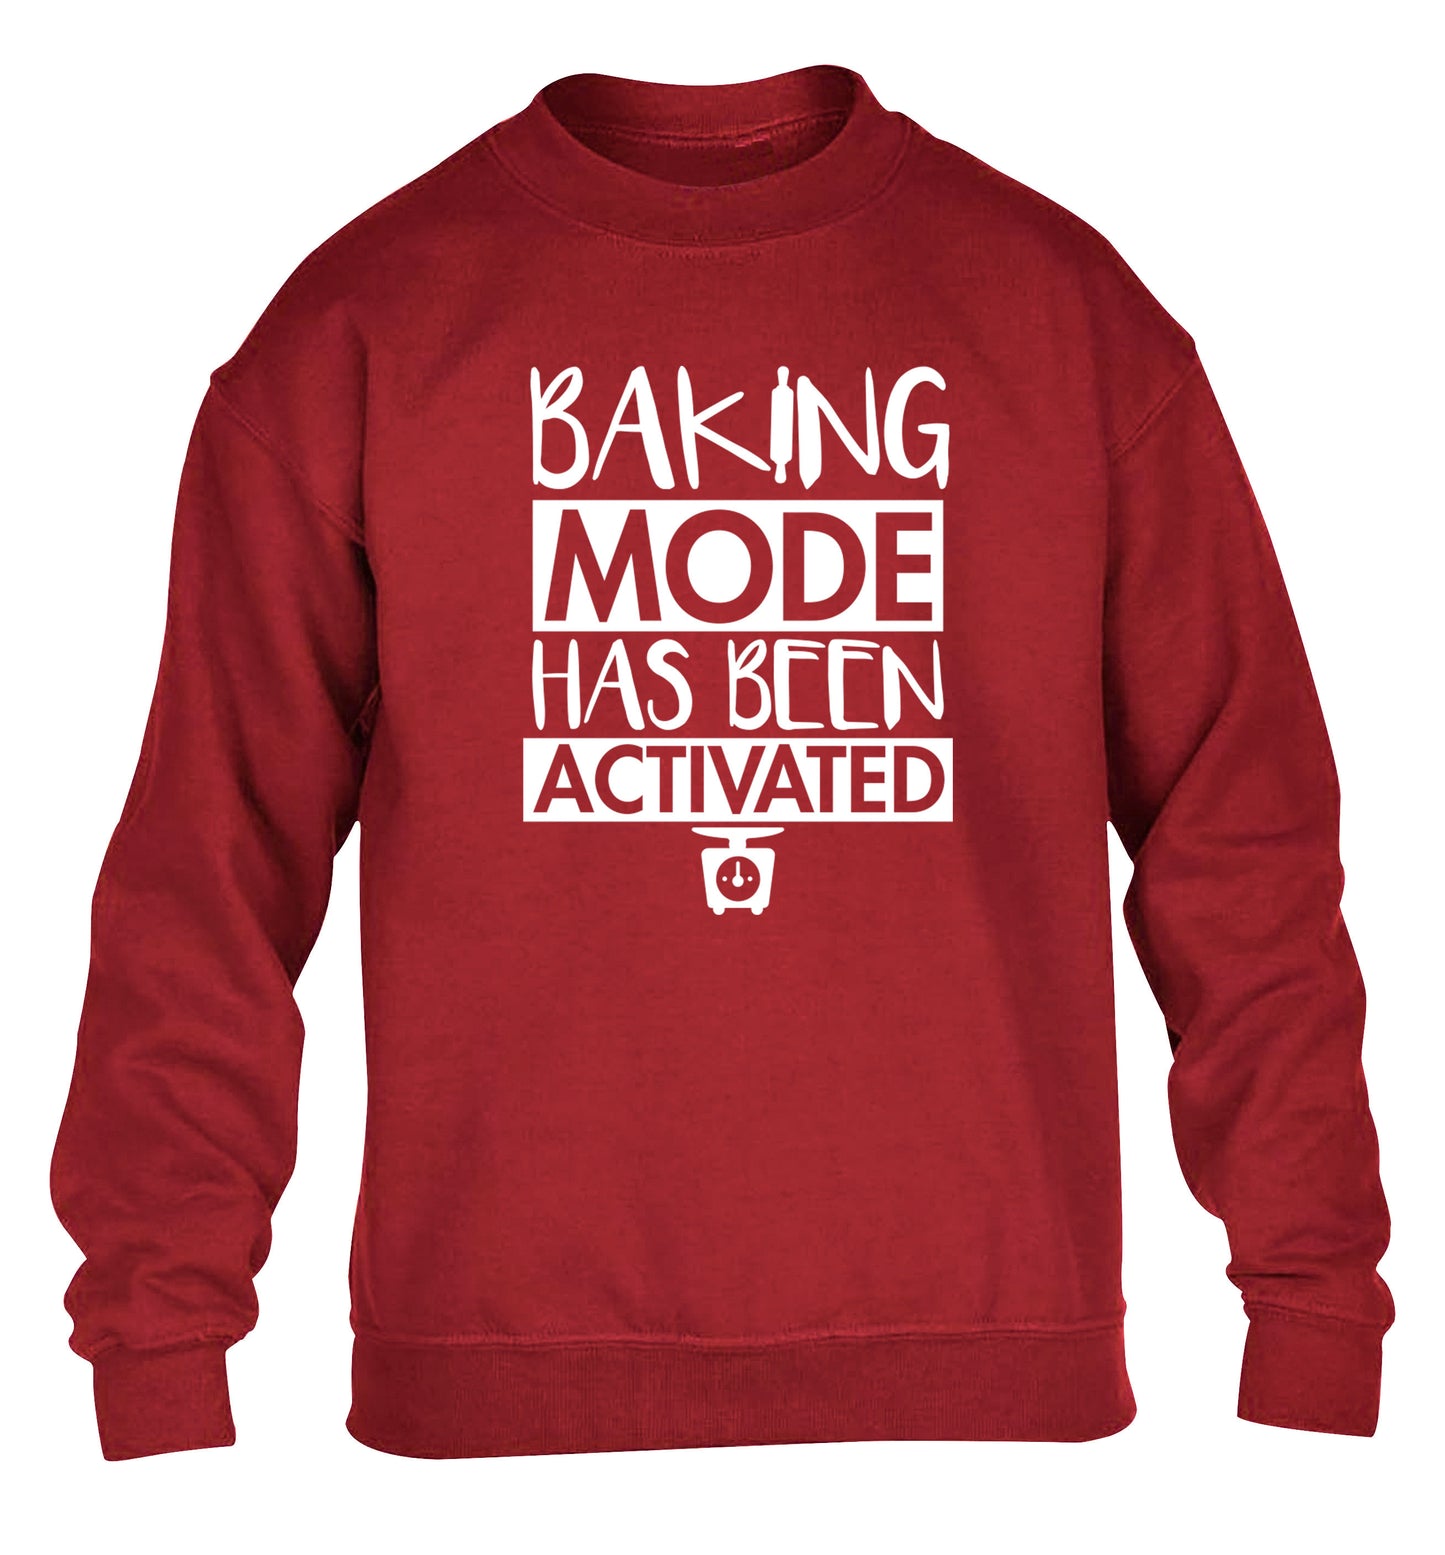 Baking mode has been activated children's grey sweater 12-14 Years